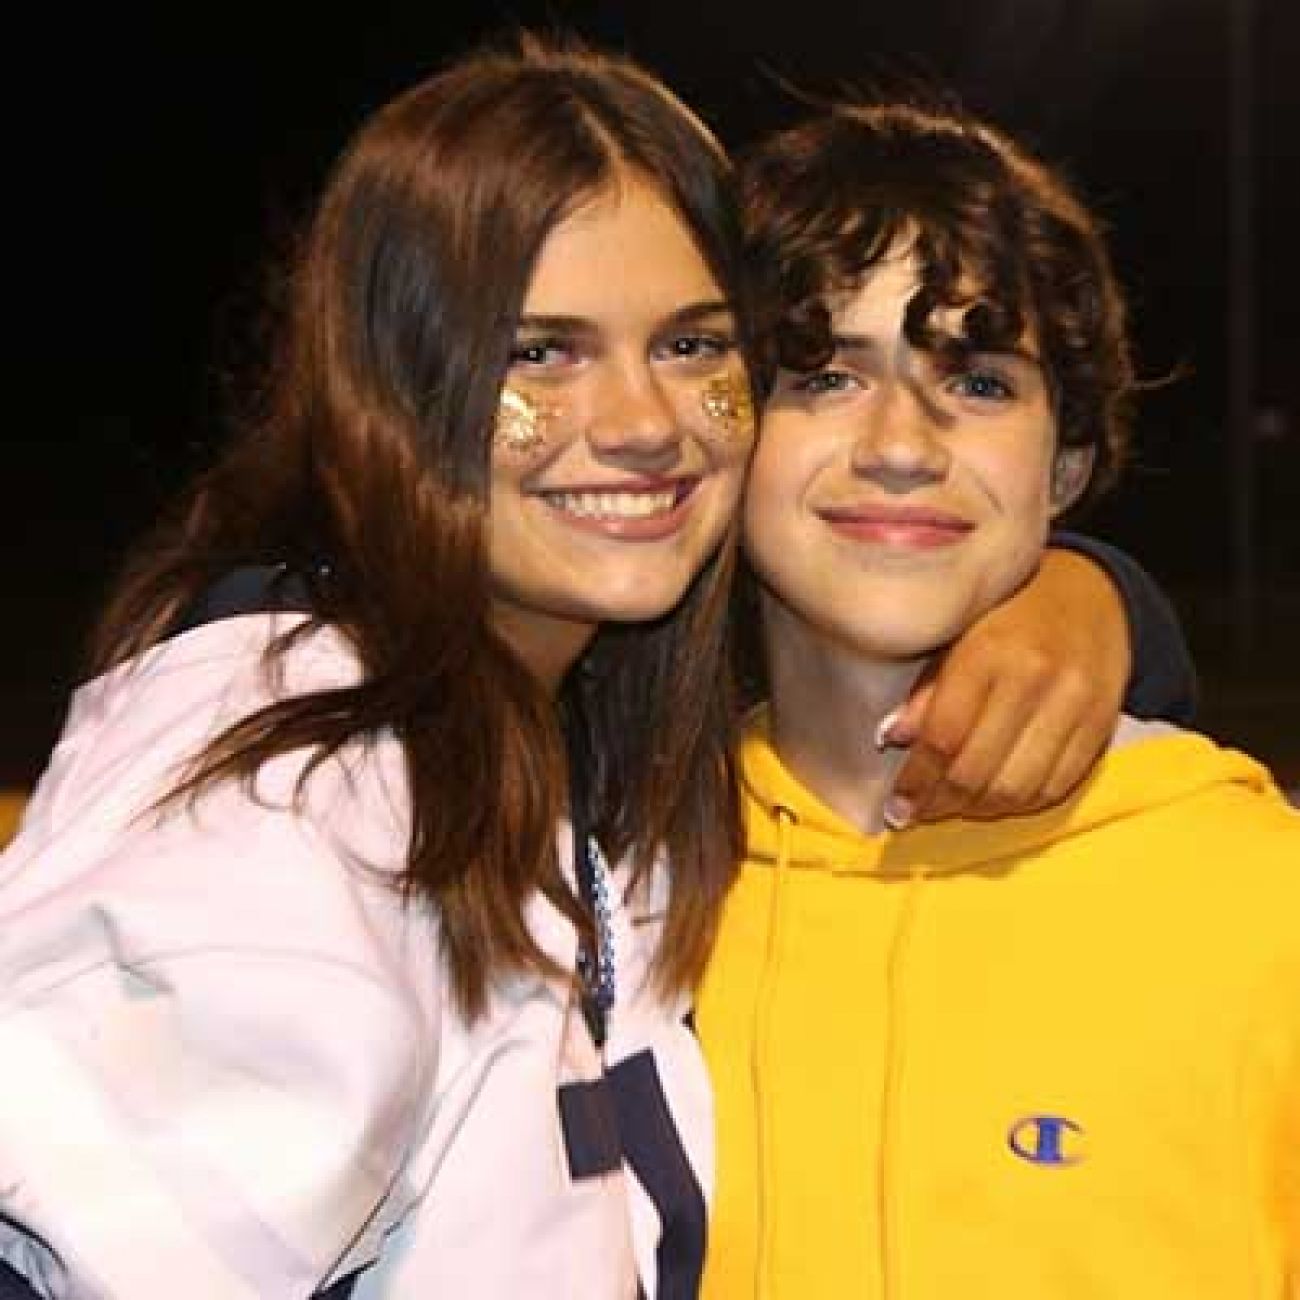 Lauren Hudson, 18, and Cole Hudson, 14,